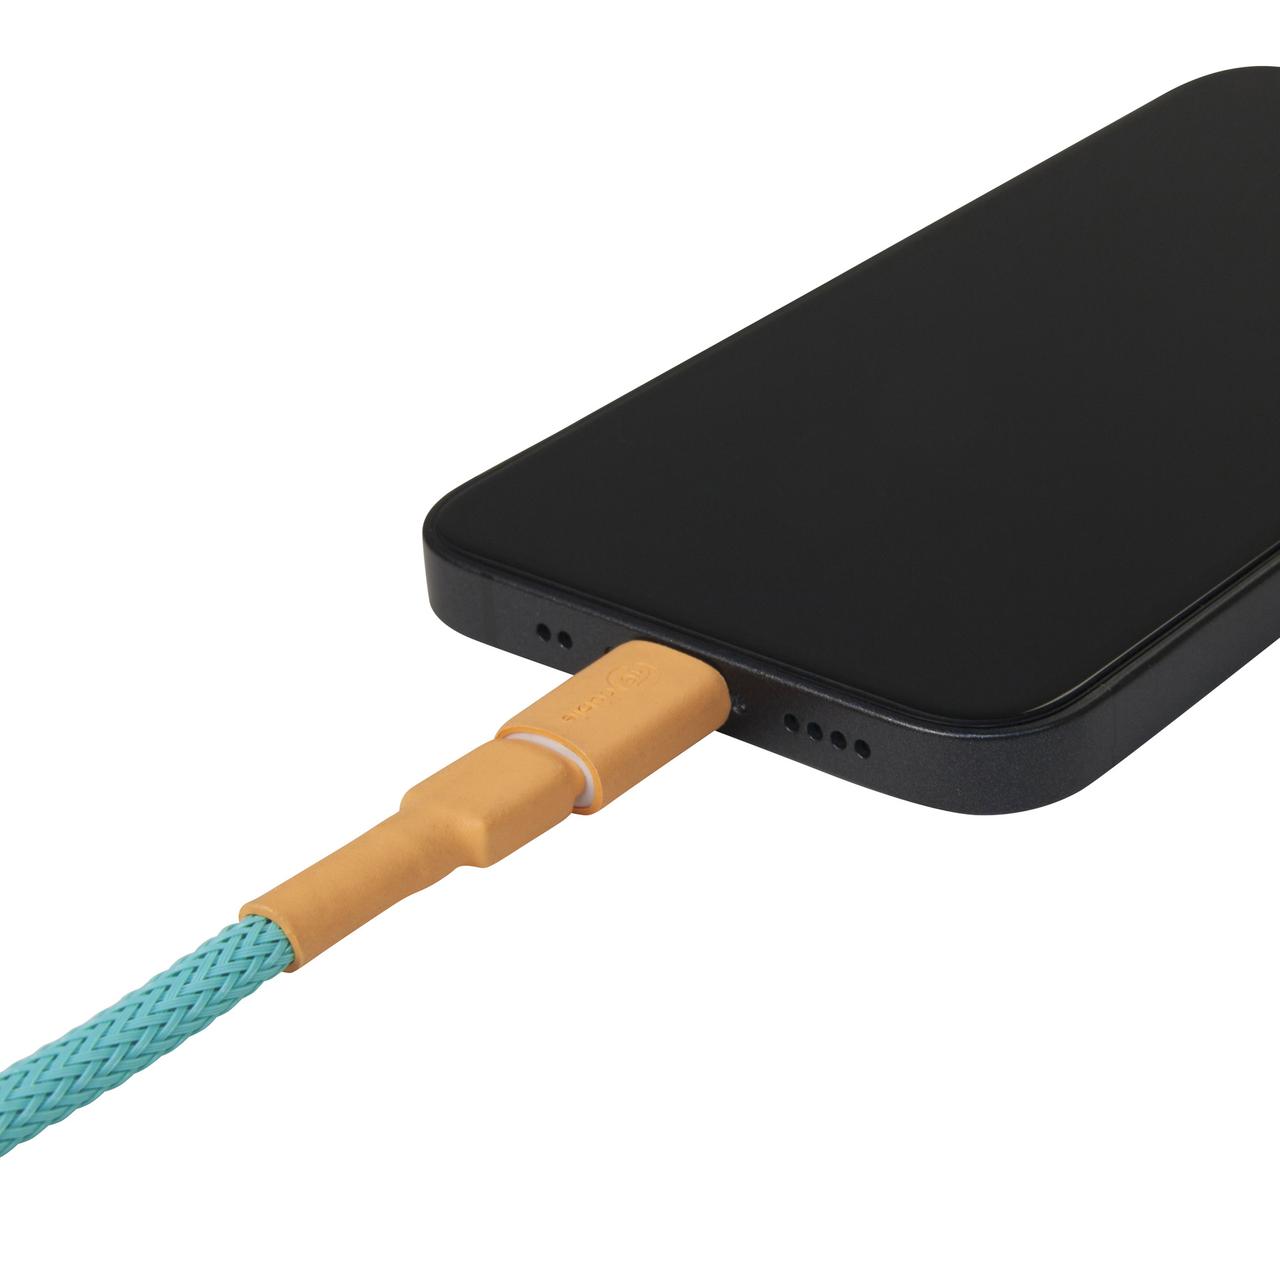 Micro USB-Kabel mit angestecktem Lightning-Adapter steckt im iPhone